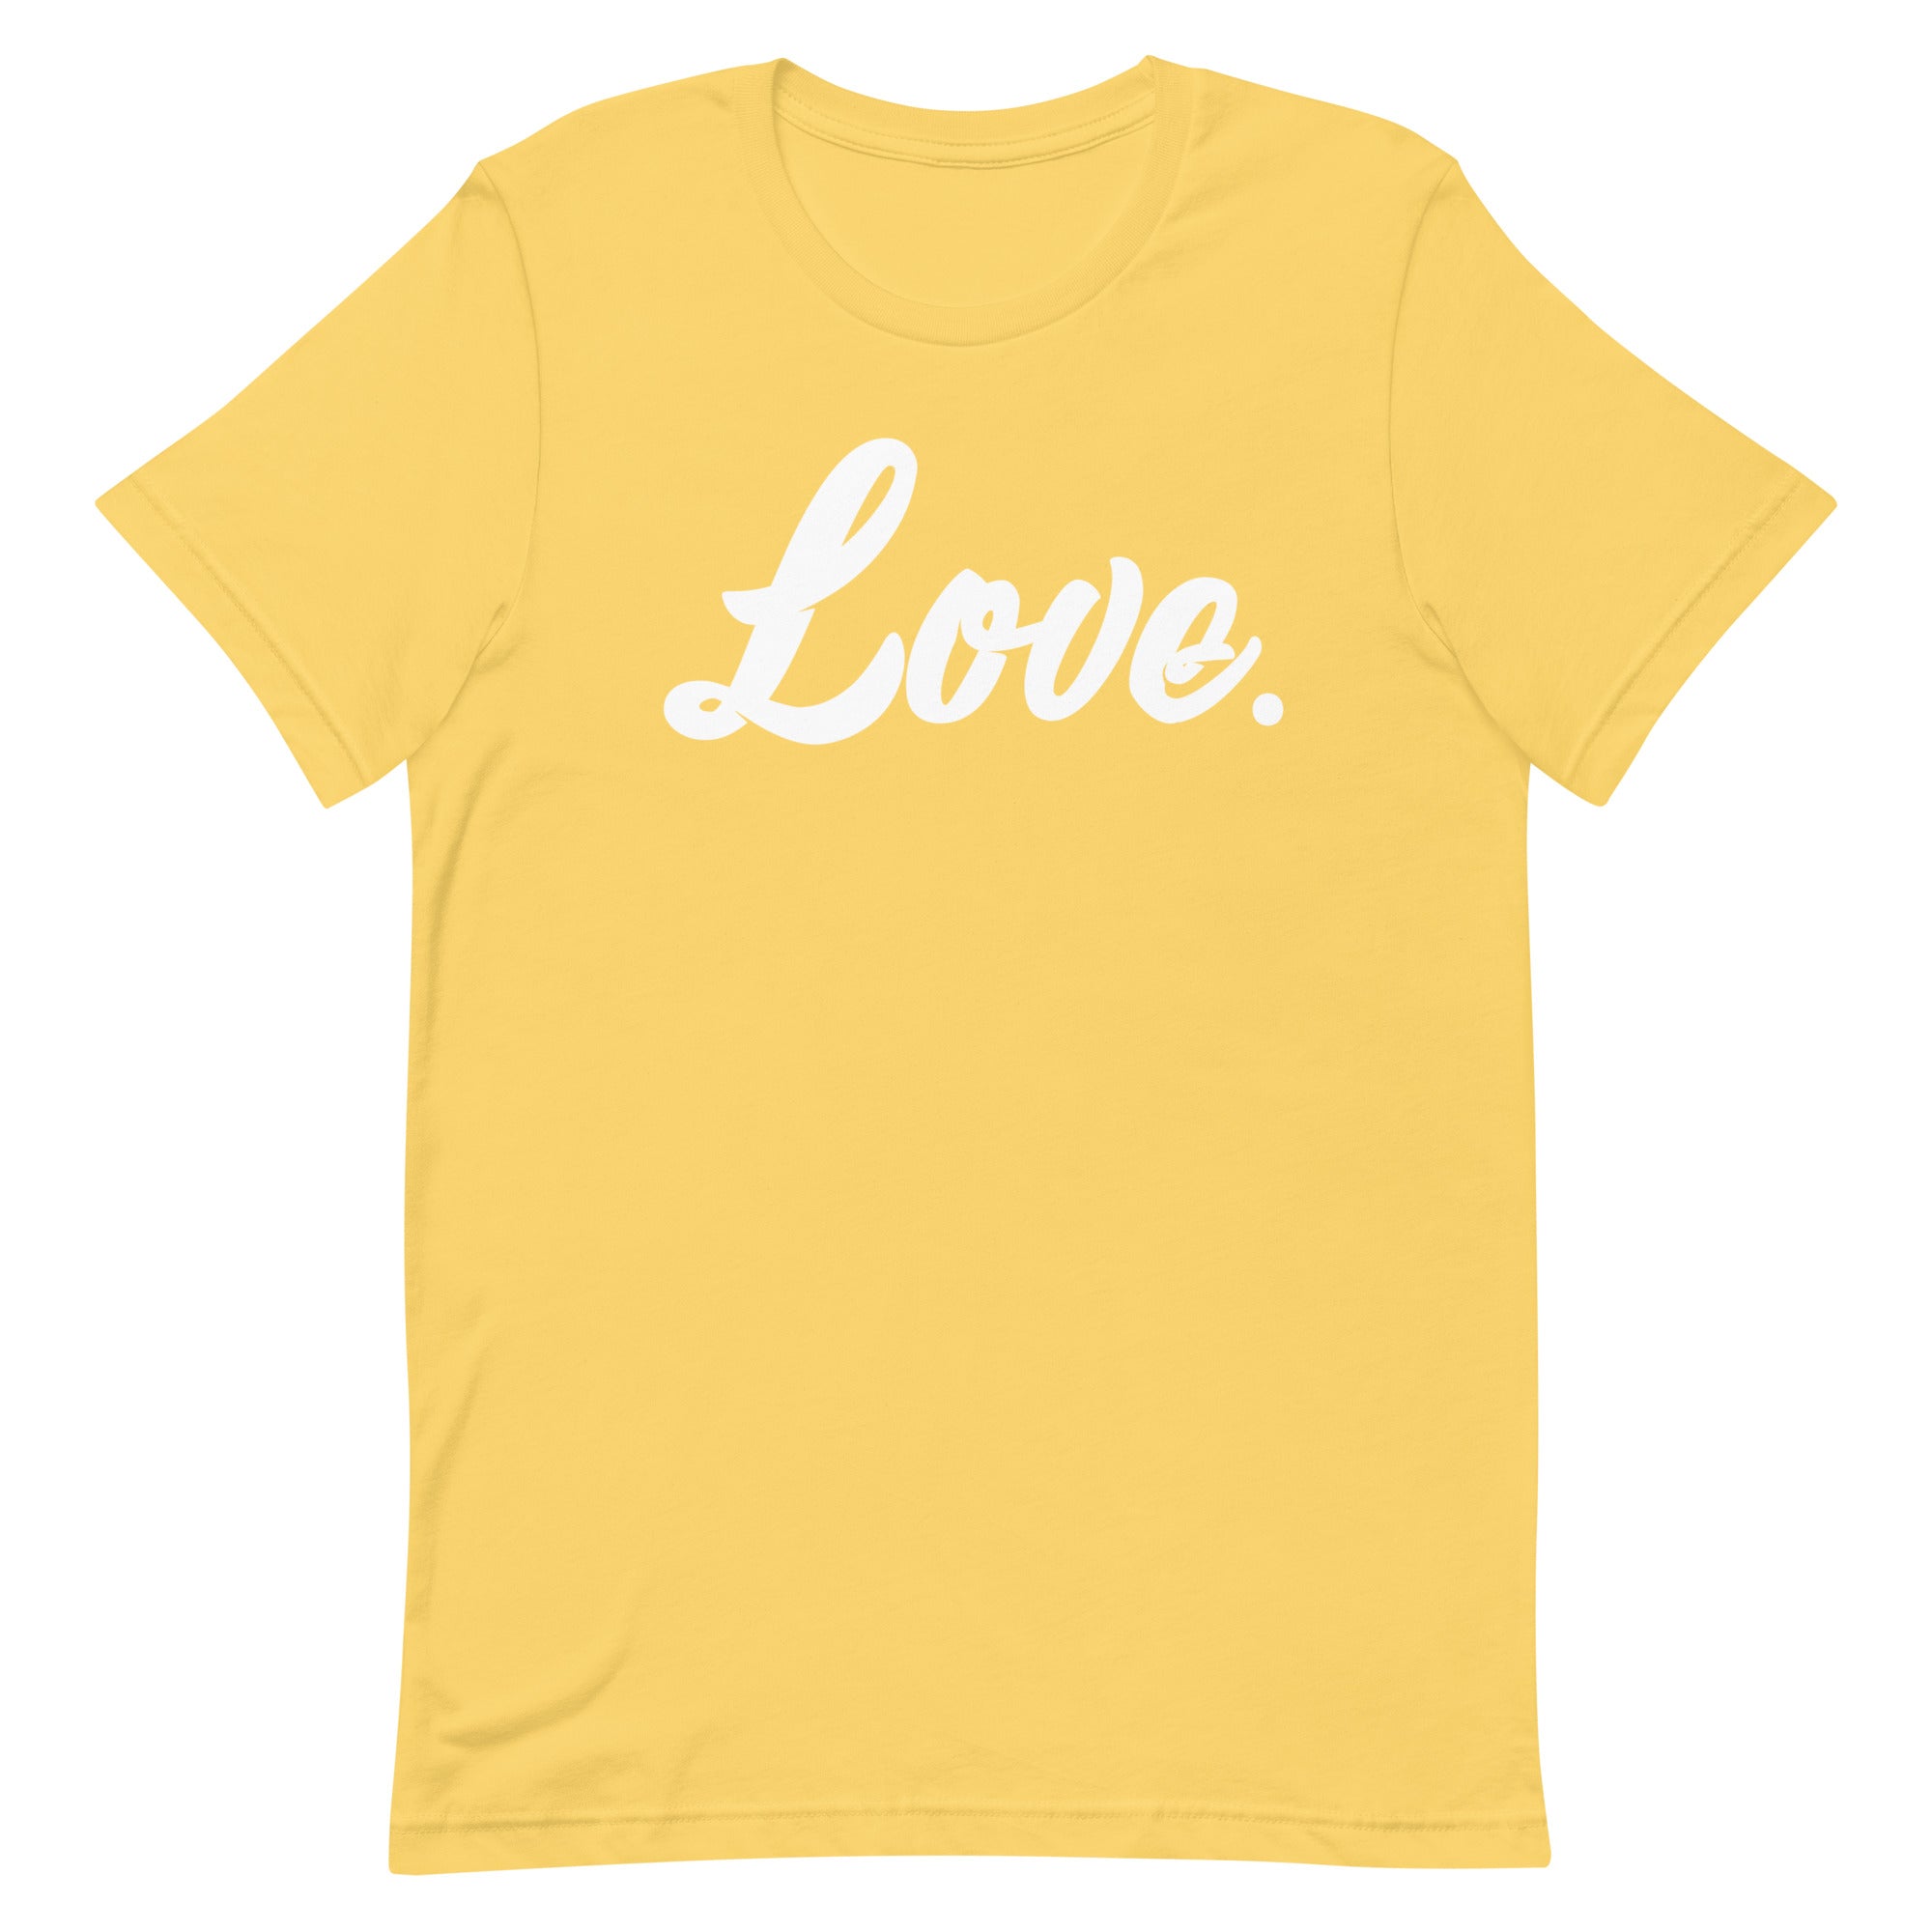 Love. t-shirt